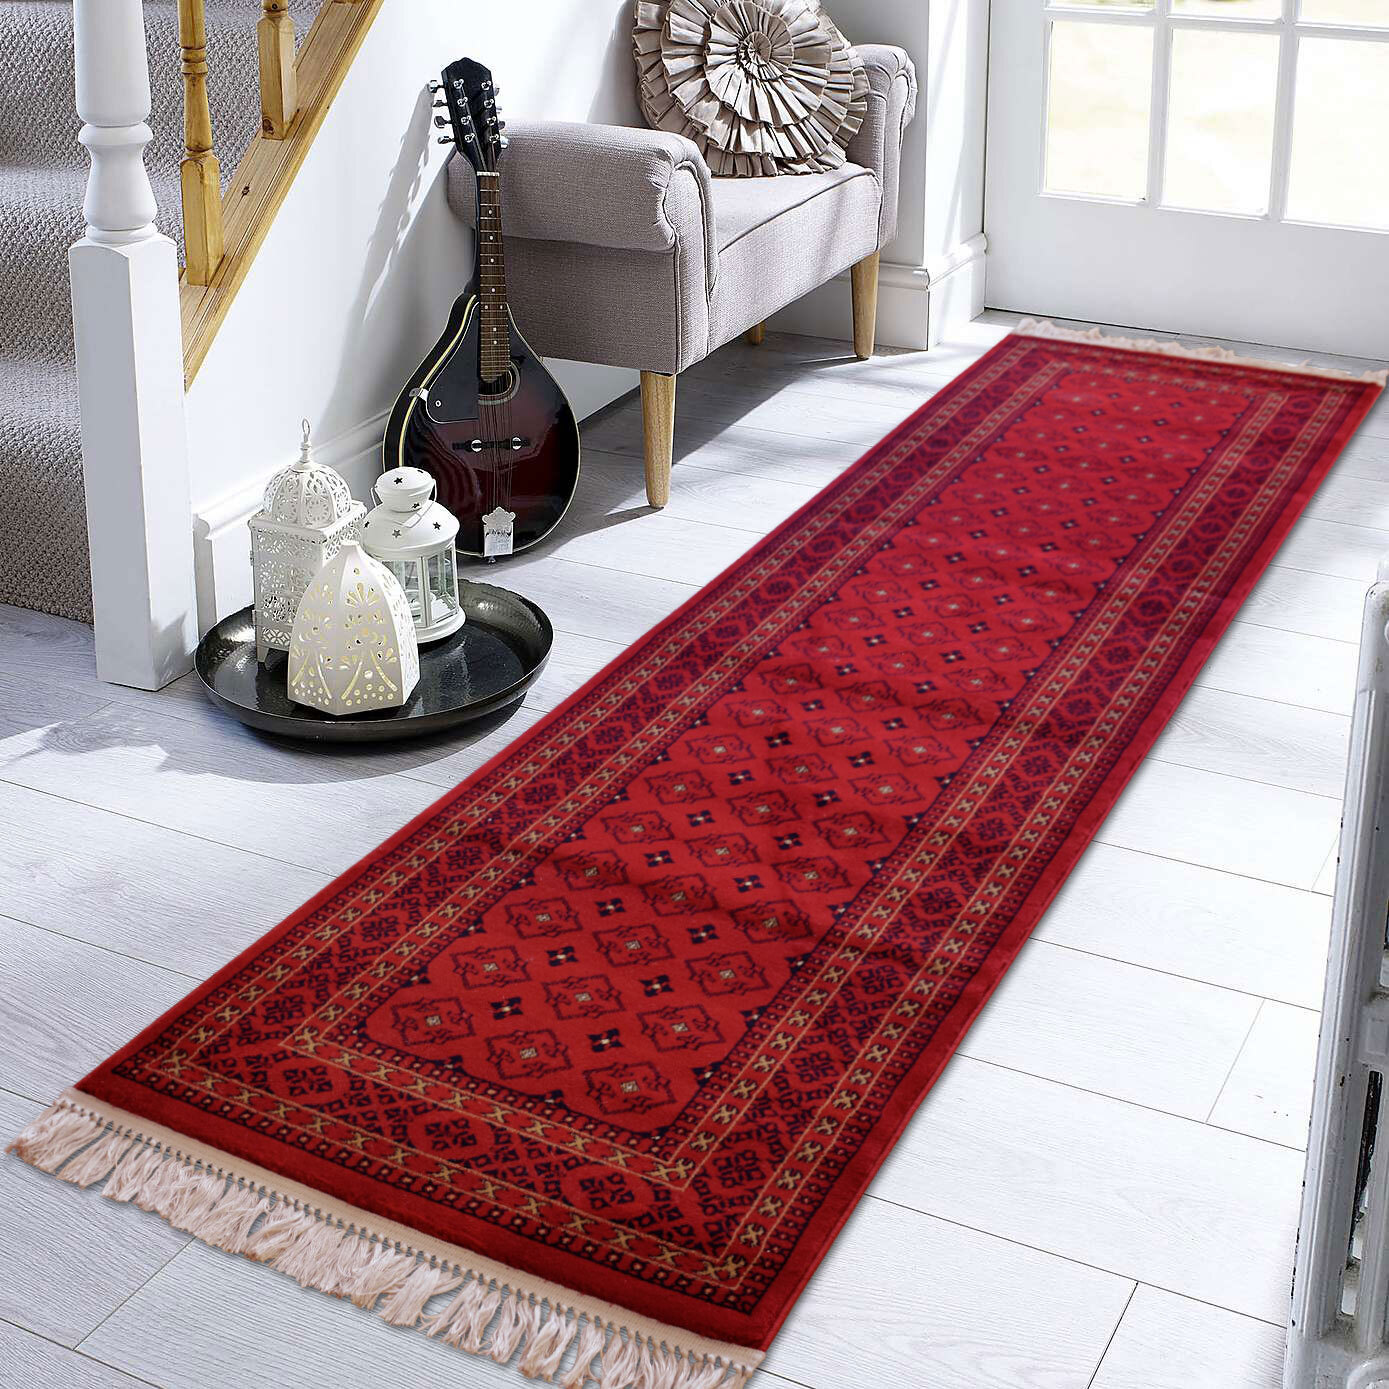 Afghan Aqcha Poshti carpet 40 x 60 hand-knotted red geometric Orient short pile z 